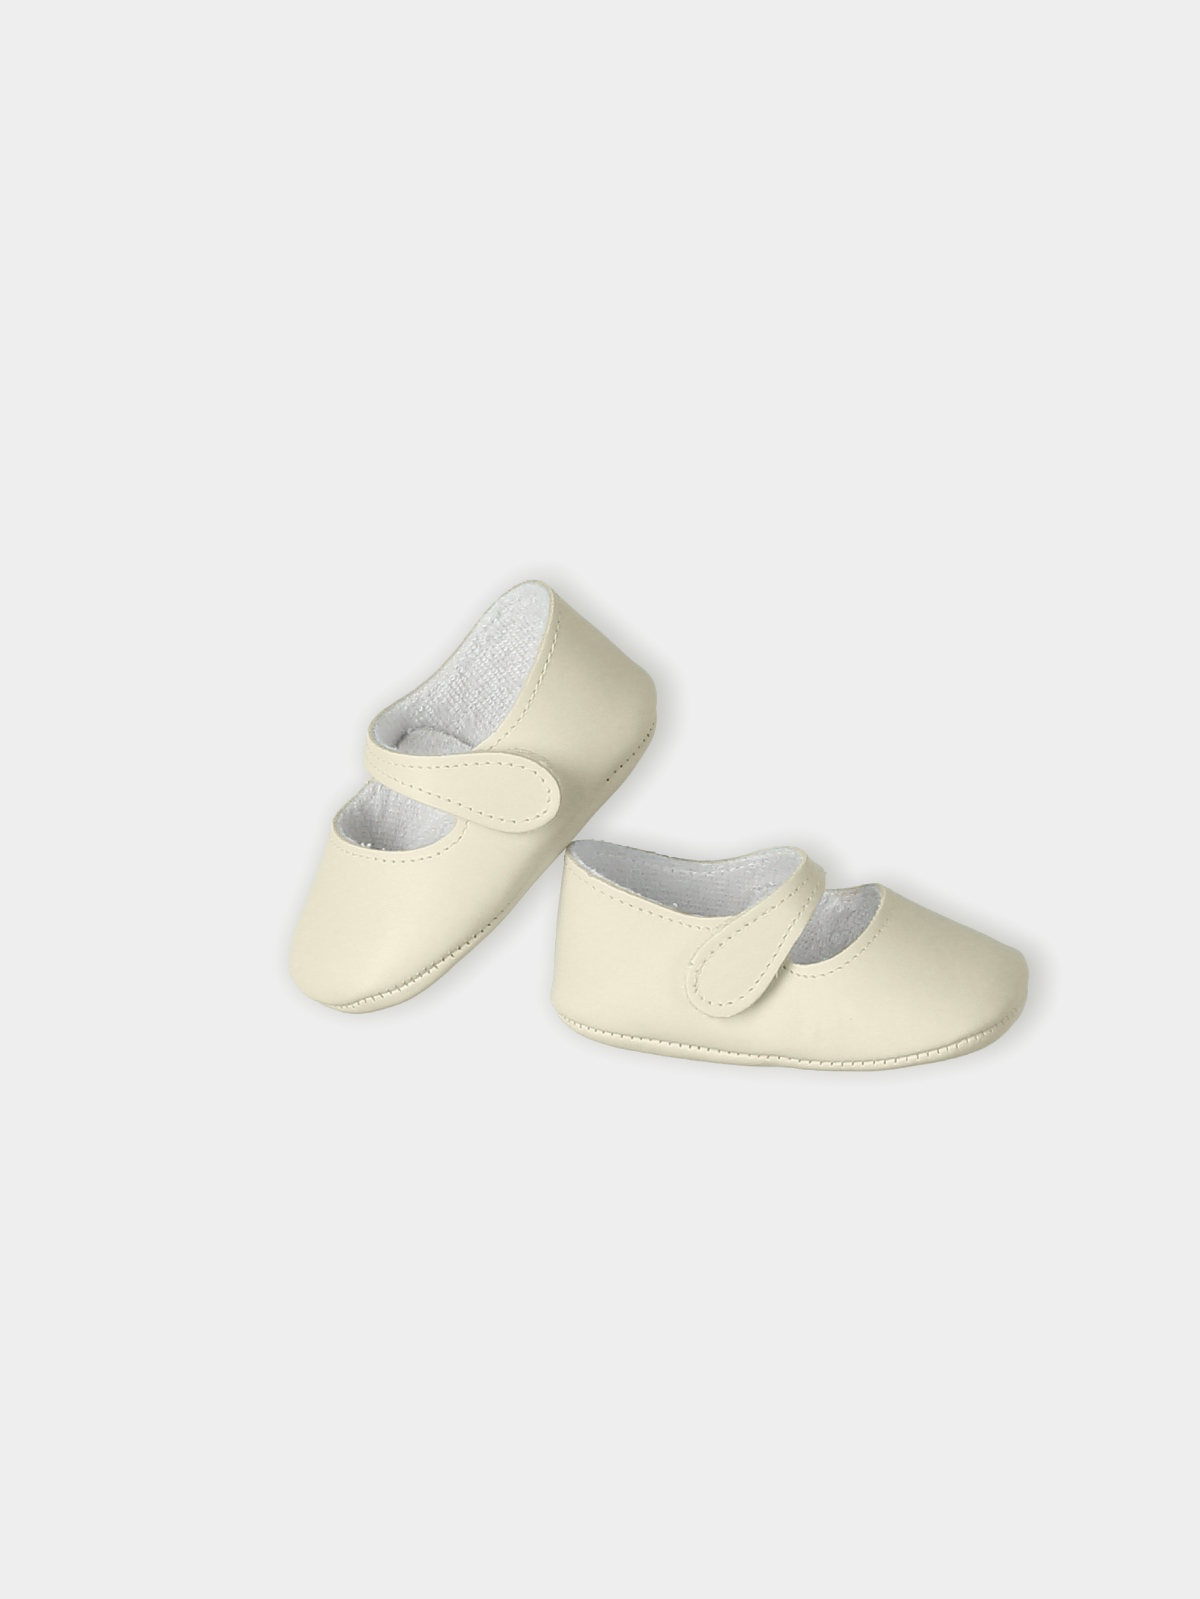 Zapatos MERCEDITAS Piel nacar 7693 SUSURRO</a><span class='precioAnt'>36,00 €</span><div class='flotanteDesc'>Quincena del bebé</div>